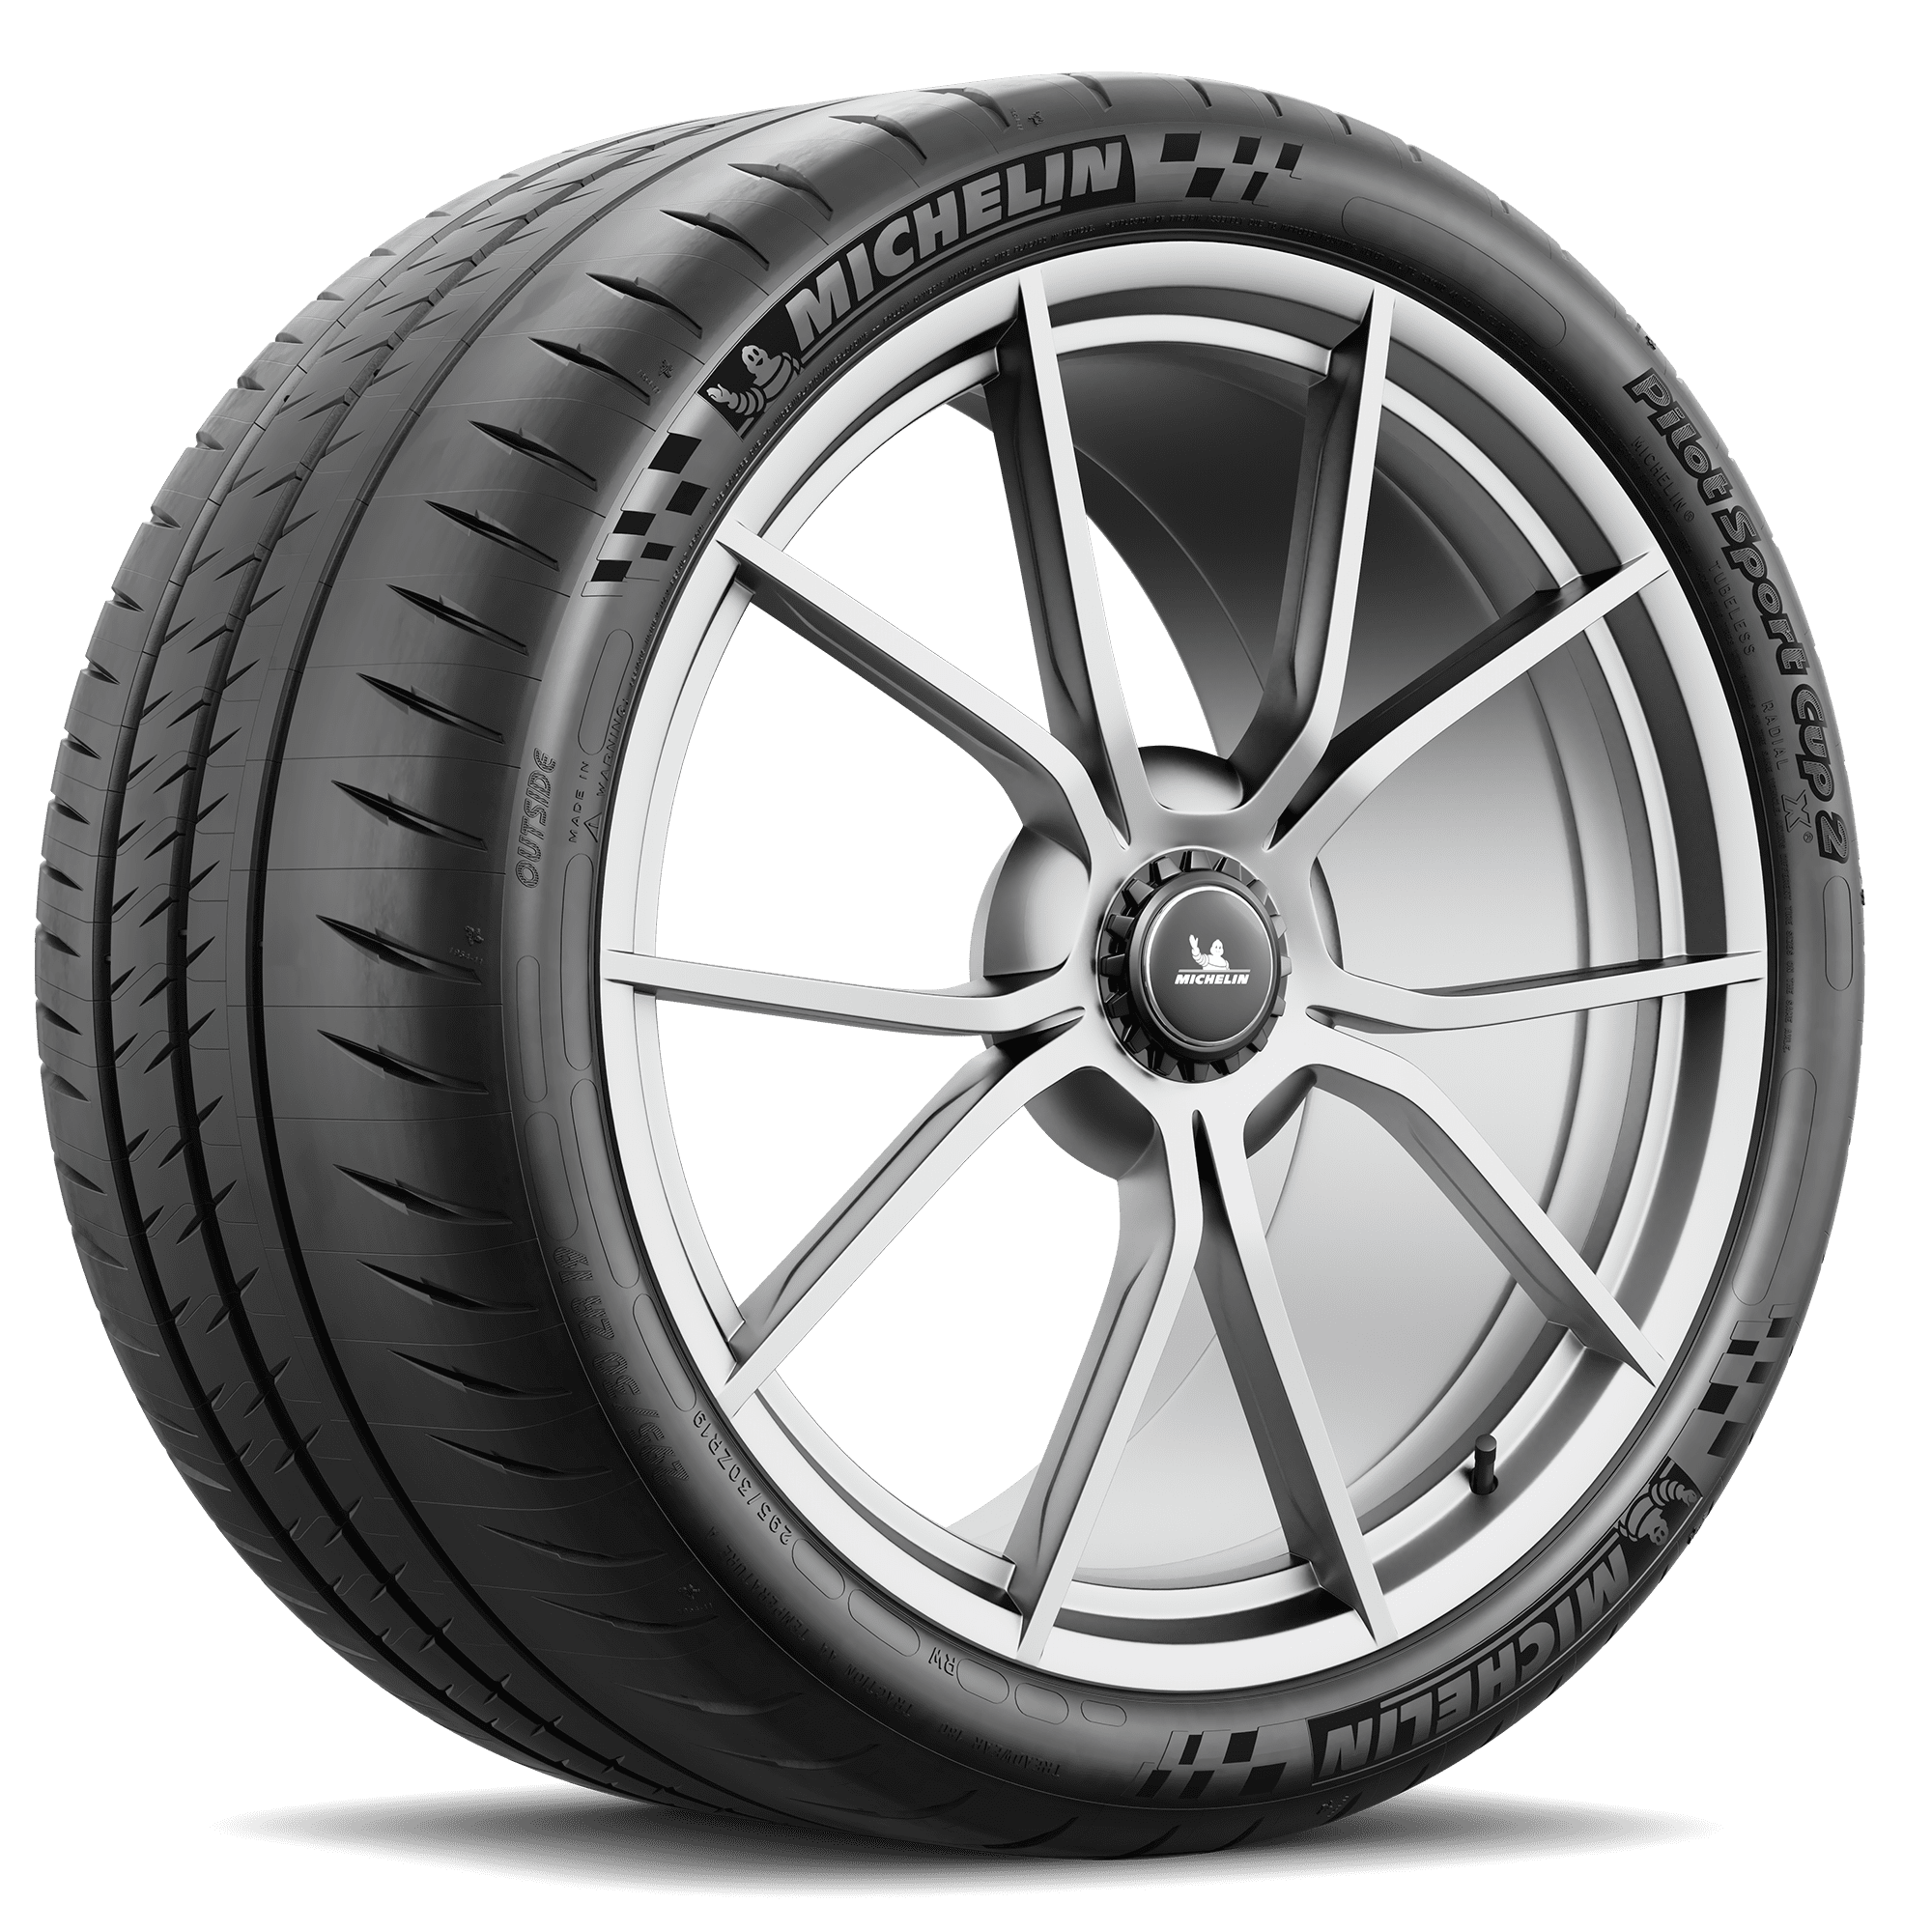 Michelin Pilot Sport Cup 2 (240) Summer 265/35ZR18/XL (97Y) Tire